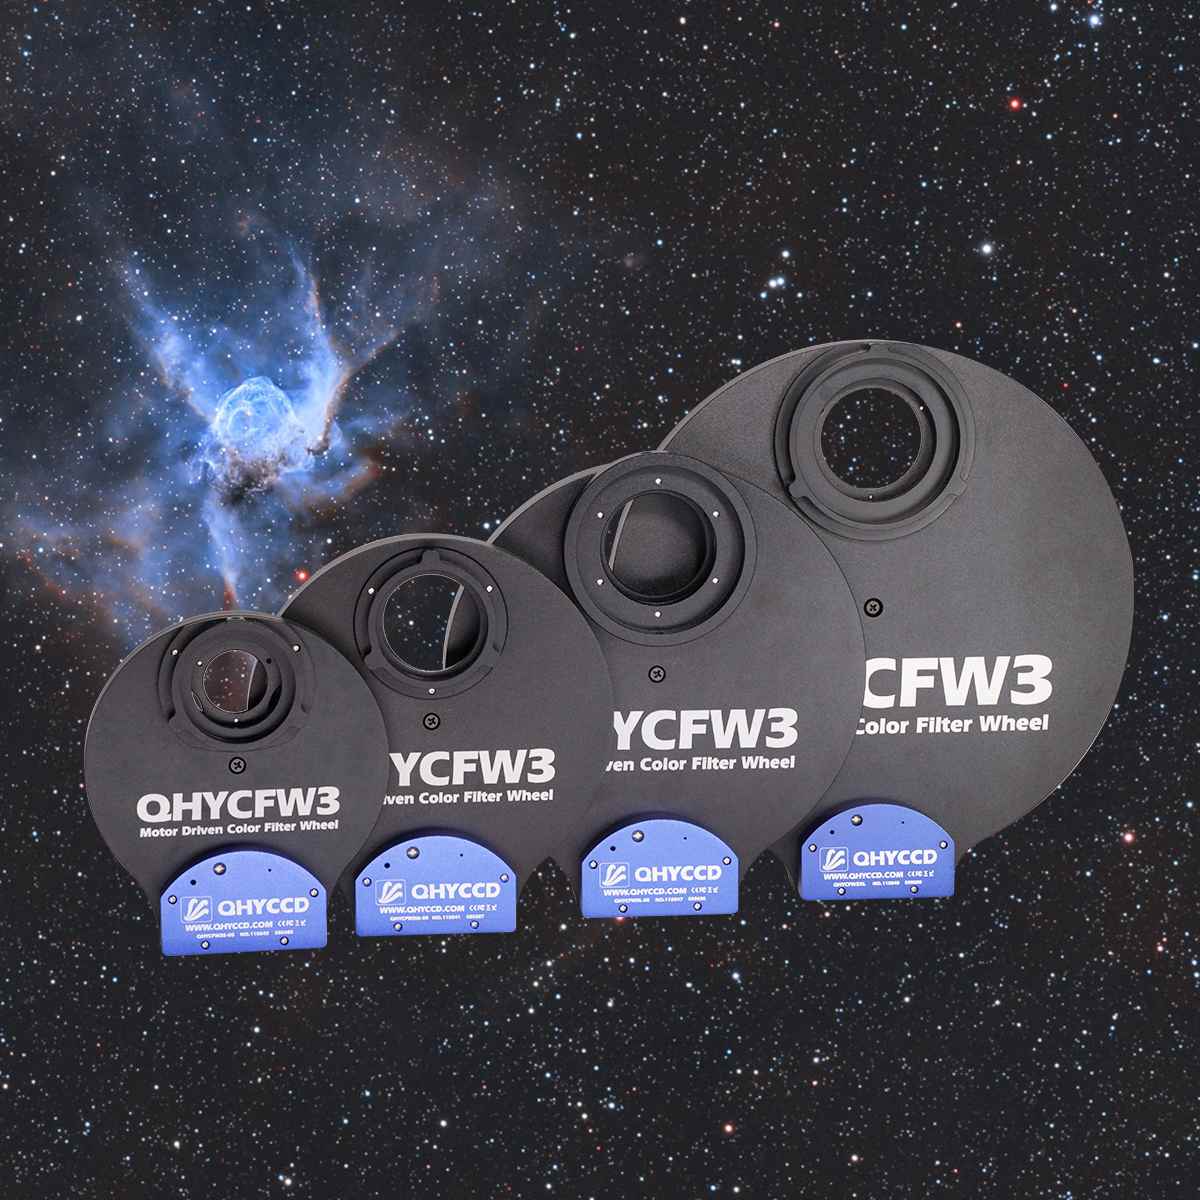 QHY Mini Guide Scope  QHYCCD Astronomical & Scientific Camera